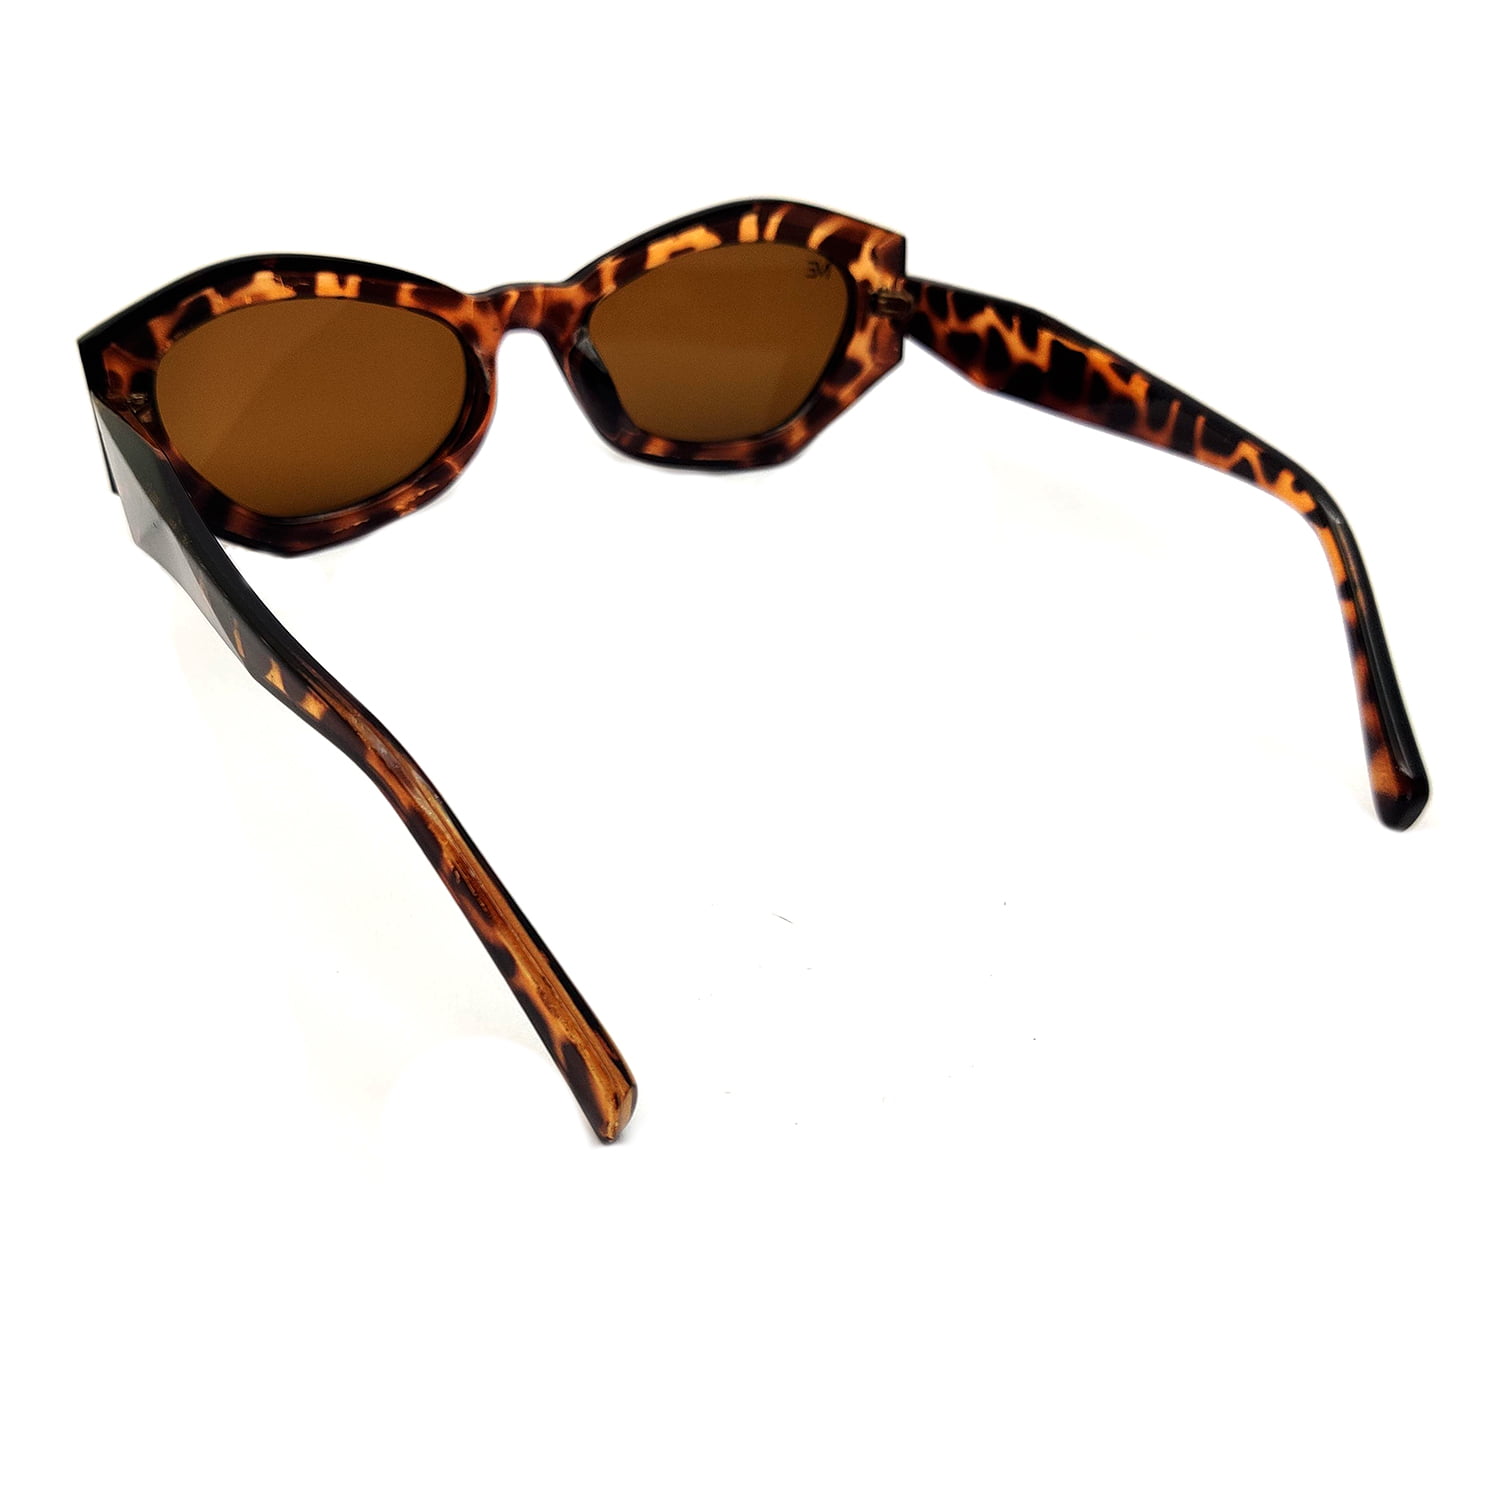 Buy Leopard Sunglasses online